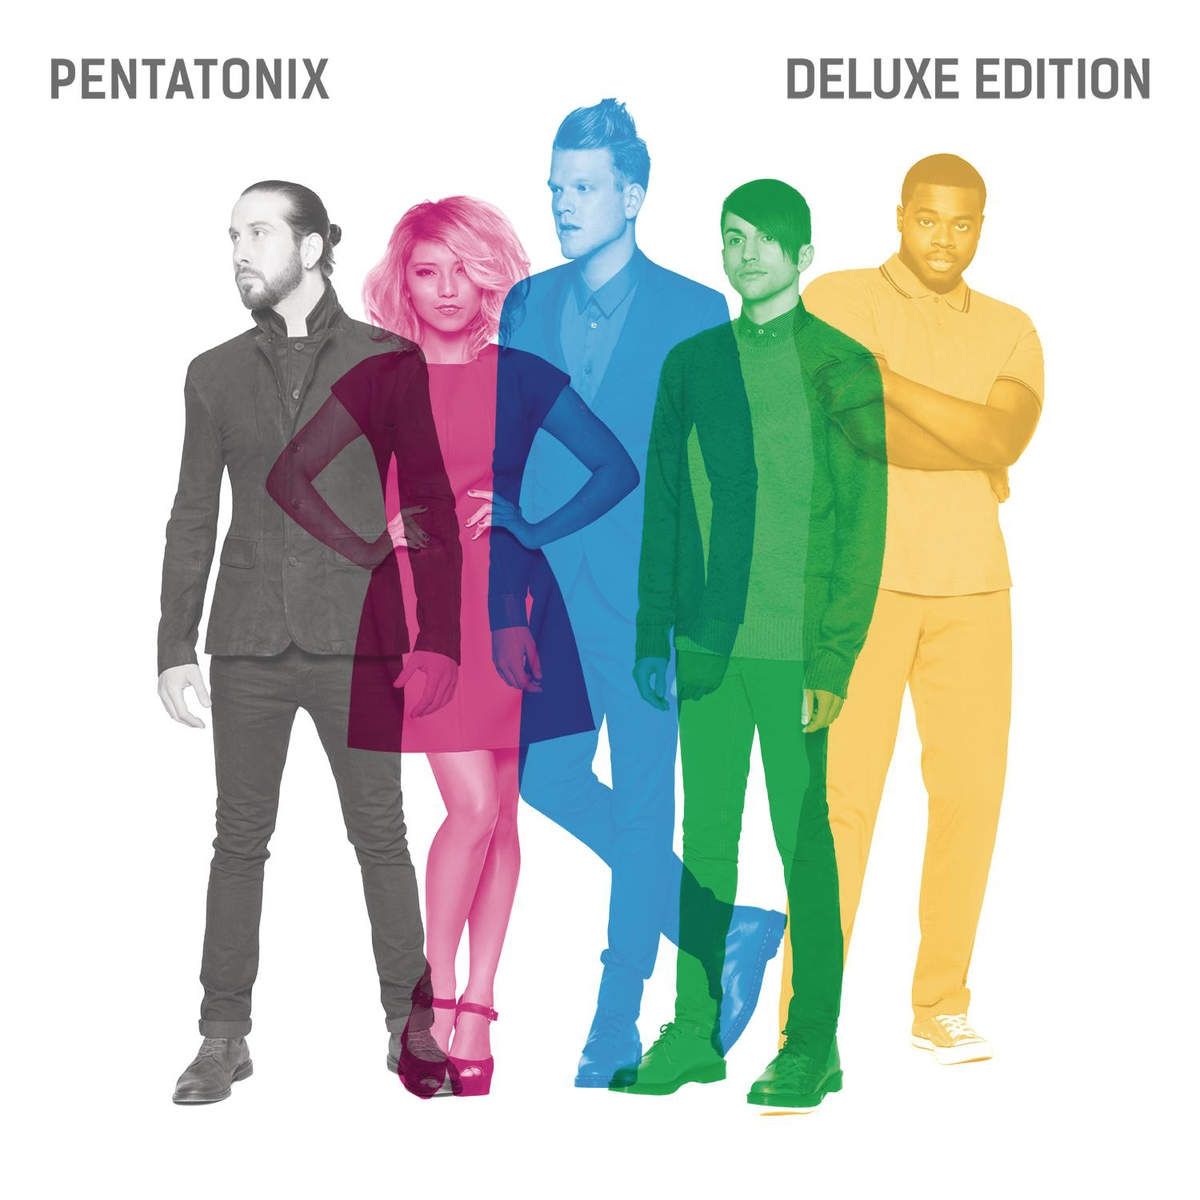 Imagem do álbum Pentatonix (Deluxe Edition) do(a) artista Pentatonix